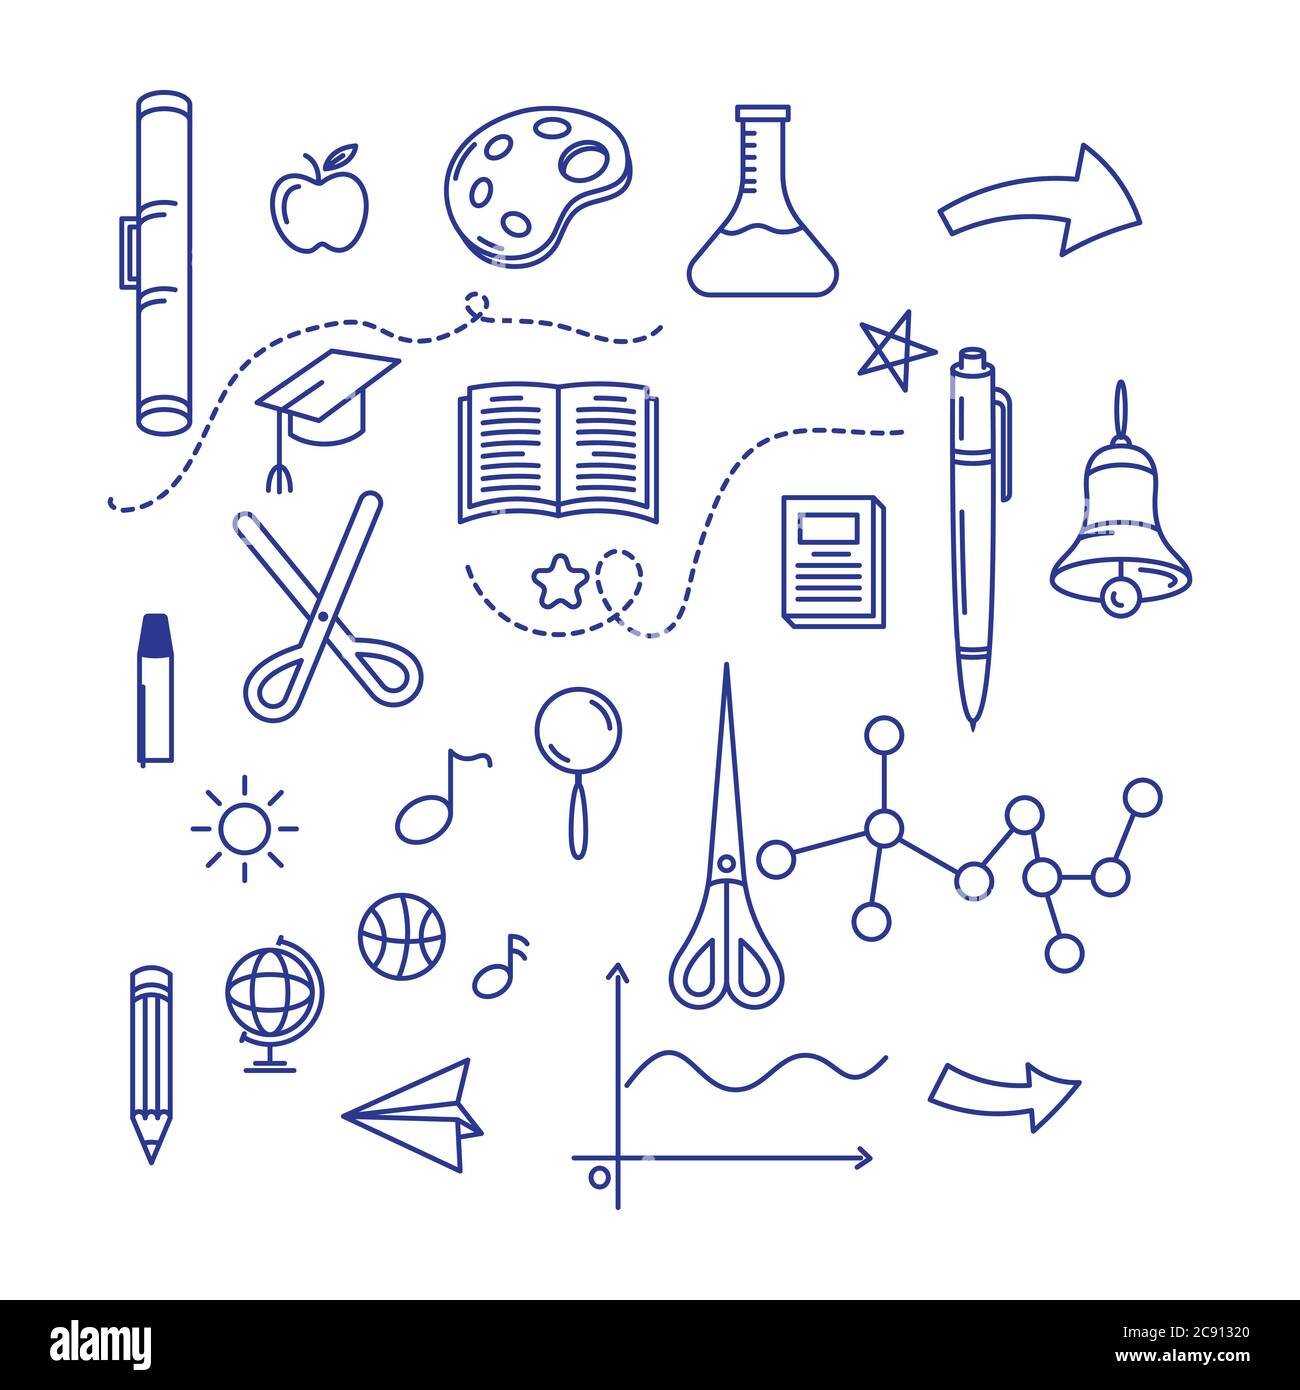 Back to school element  icon vector illustration design Stock Vector